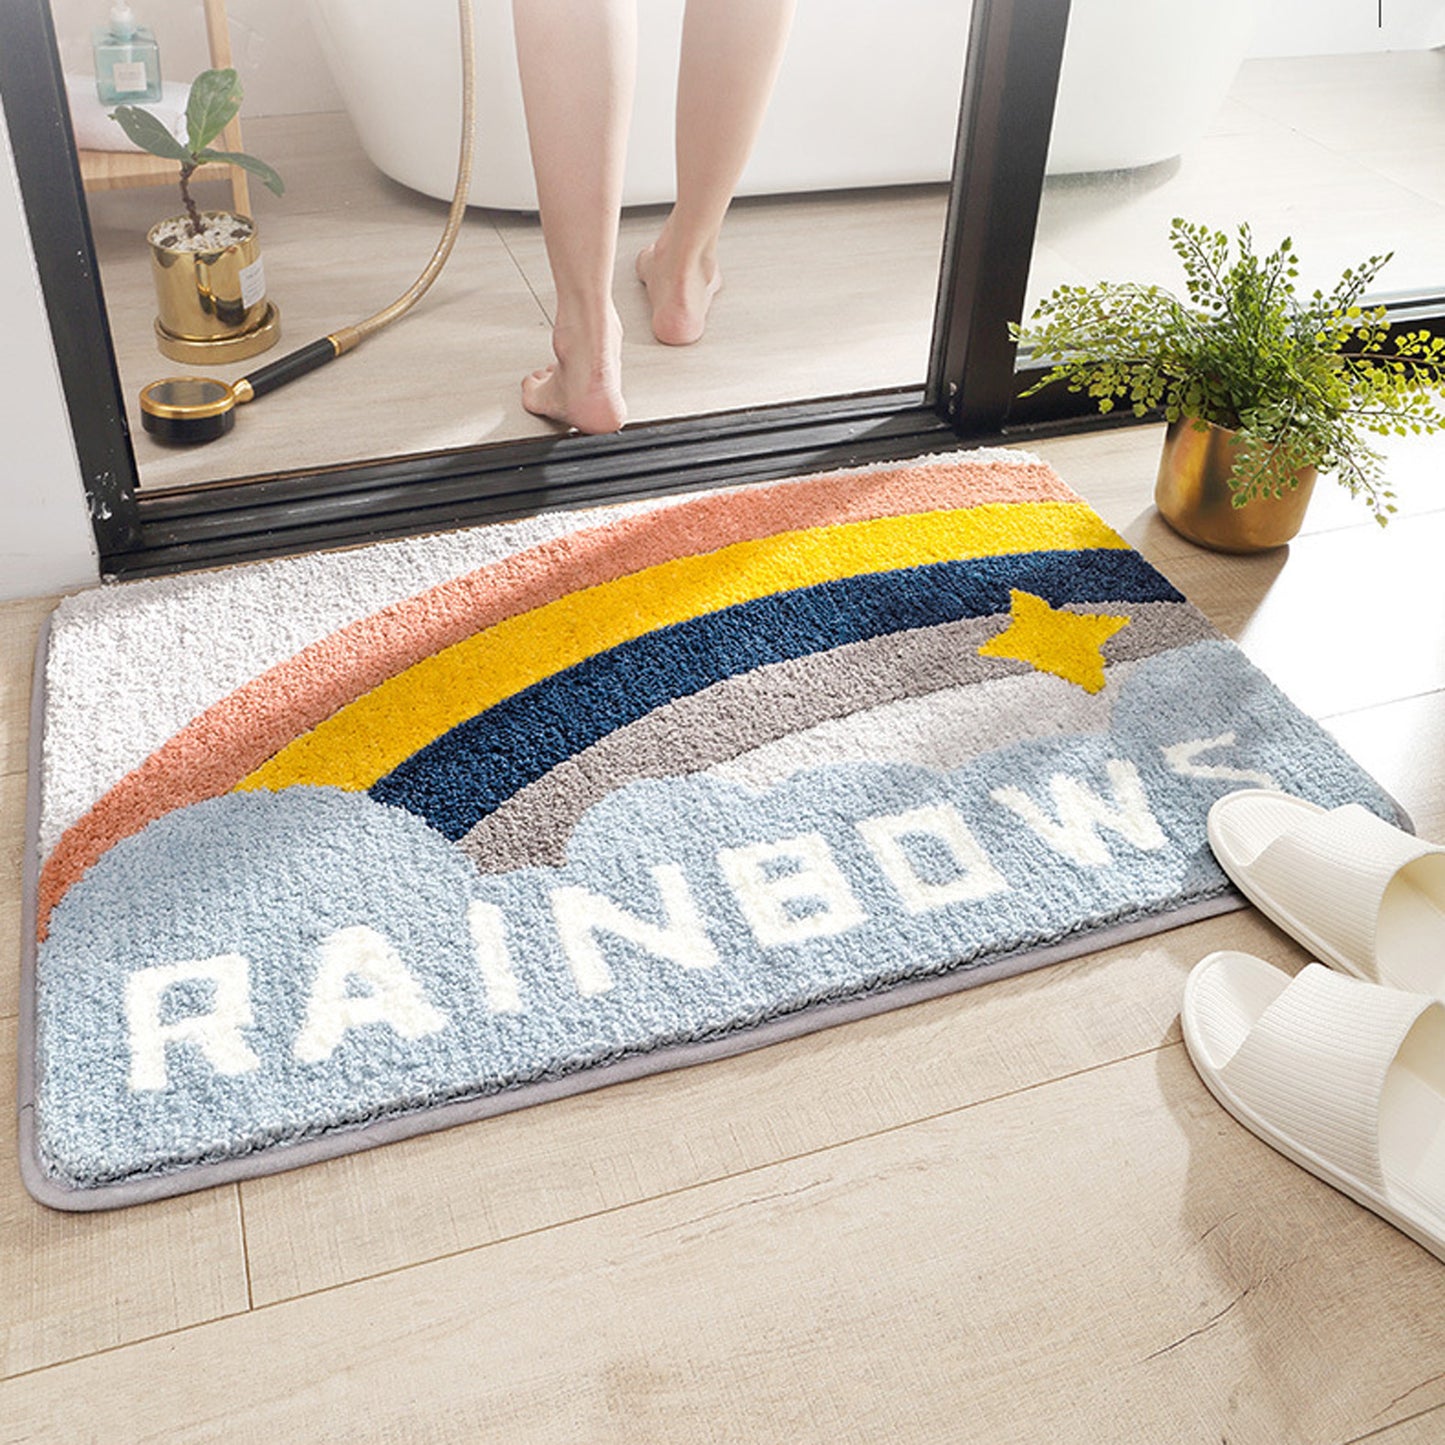 Space rainbow bath mat colorful cute bathroom decor